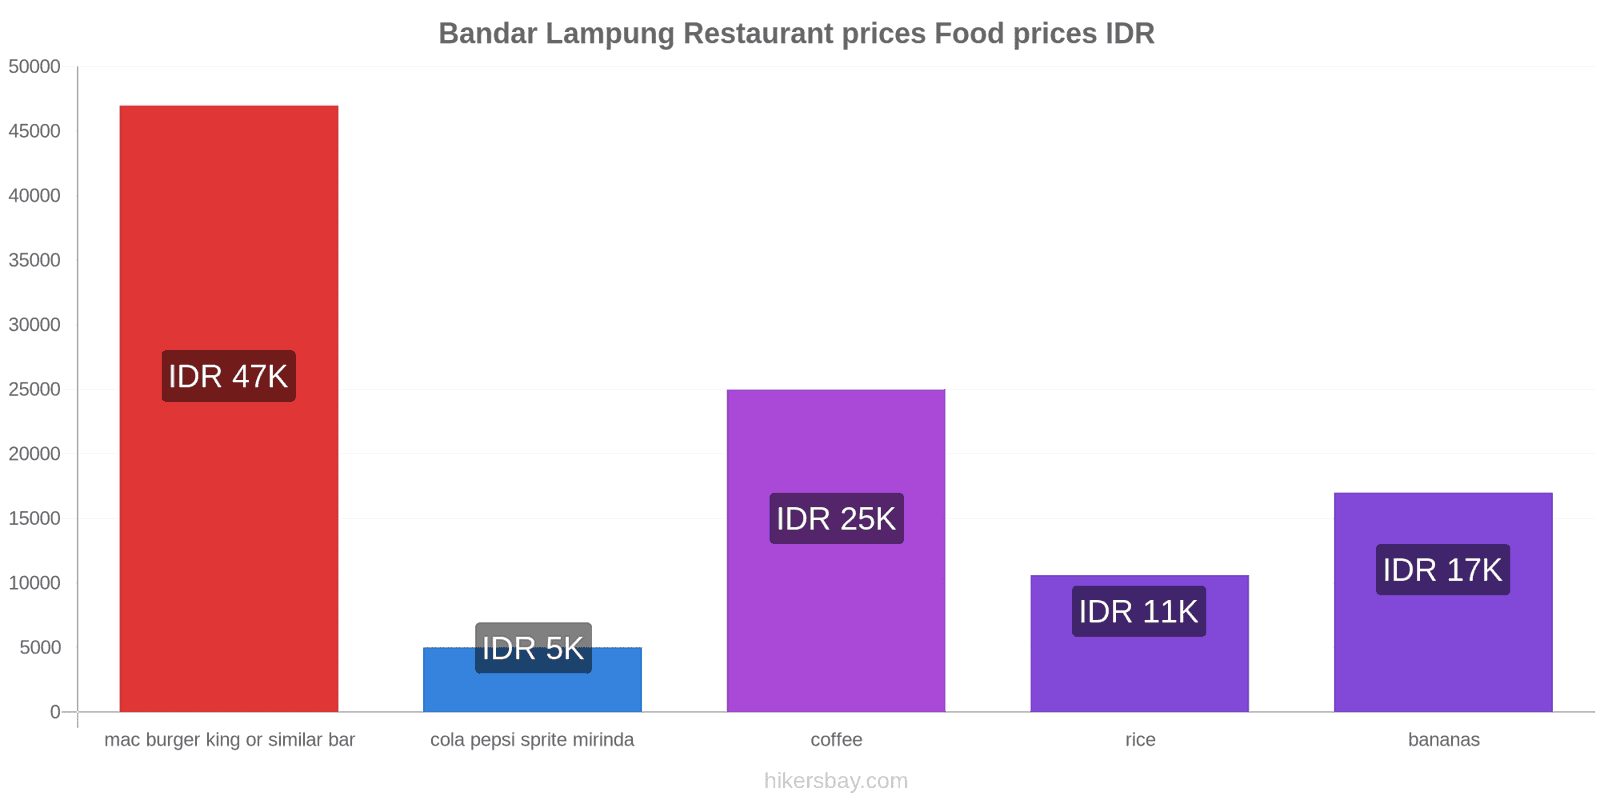 Bandar Lampung price changes hikersbay.com